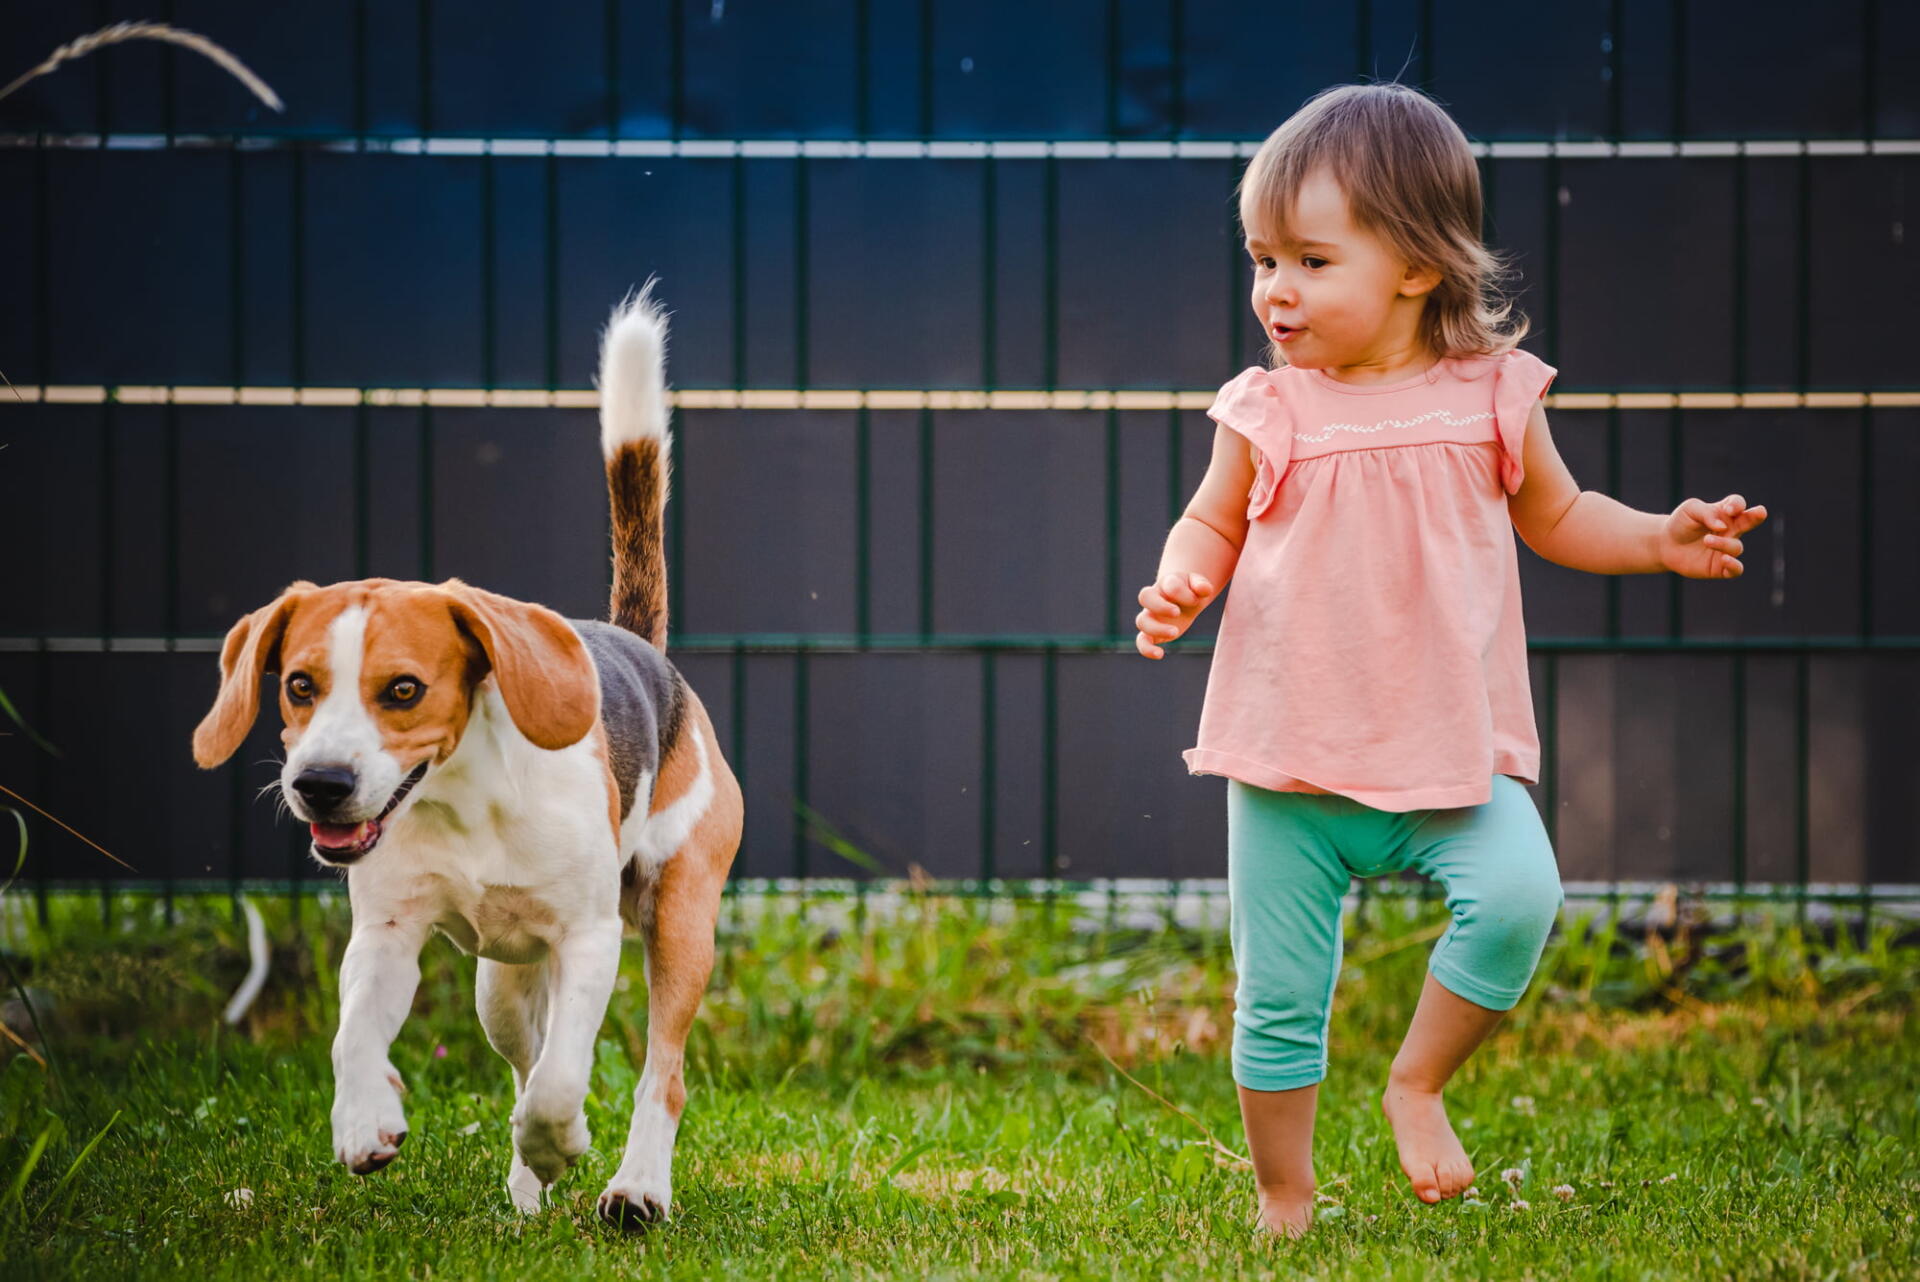 Child and beagle in a dog friendly backyard